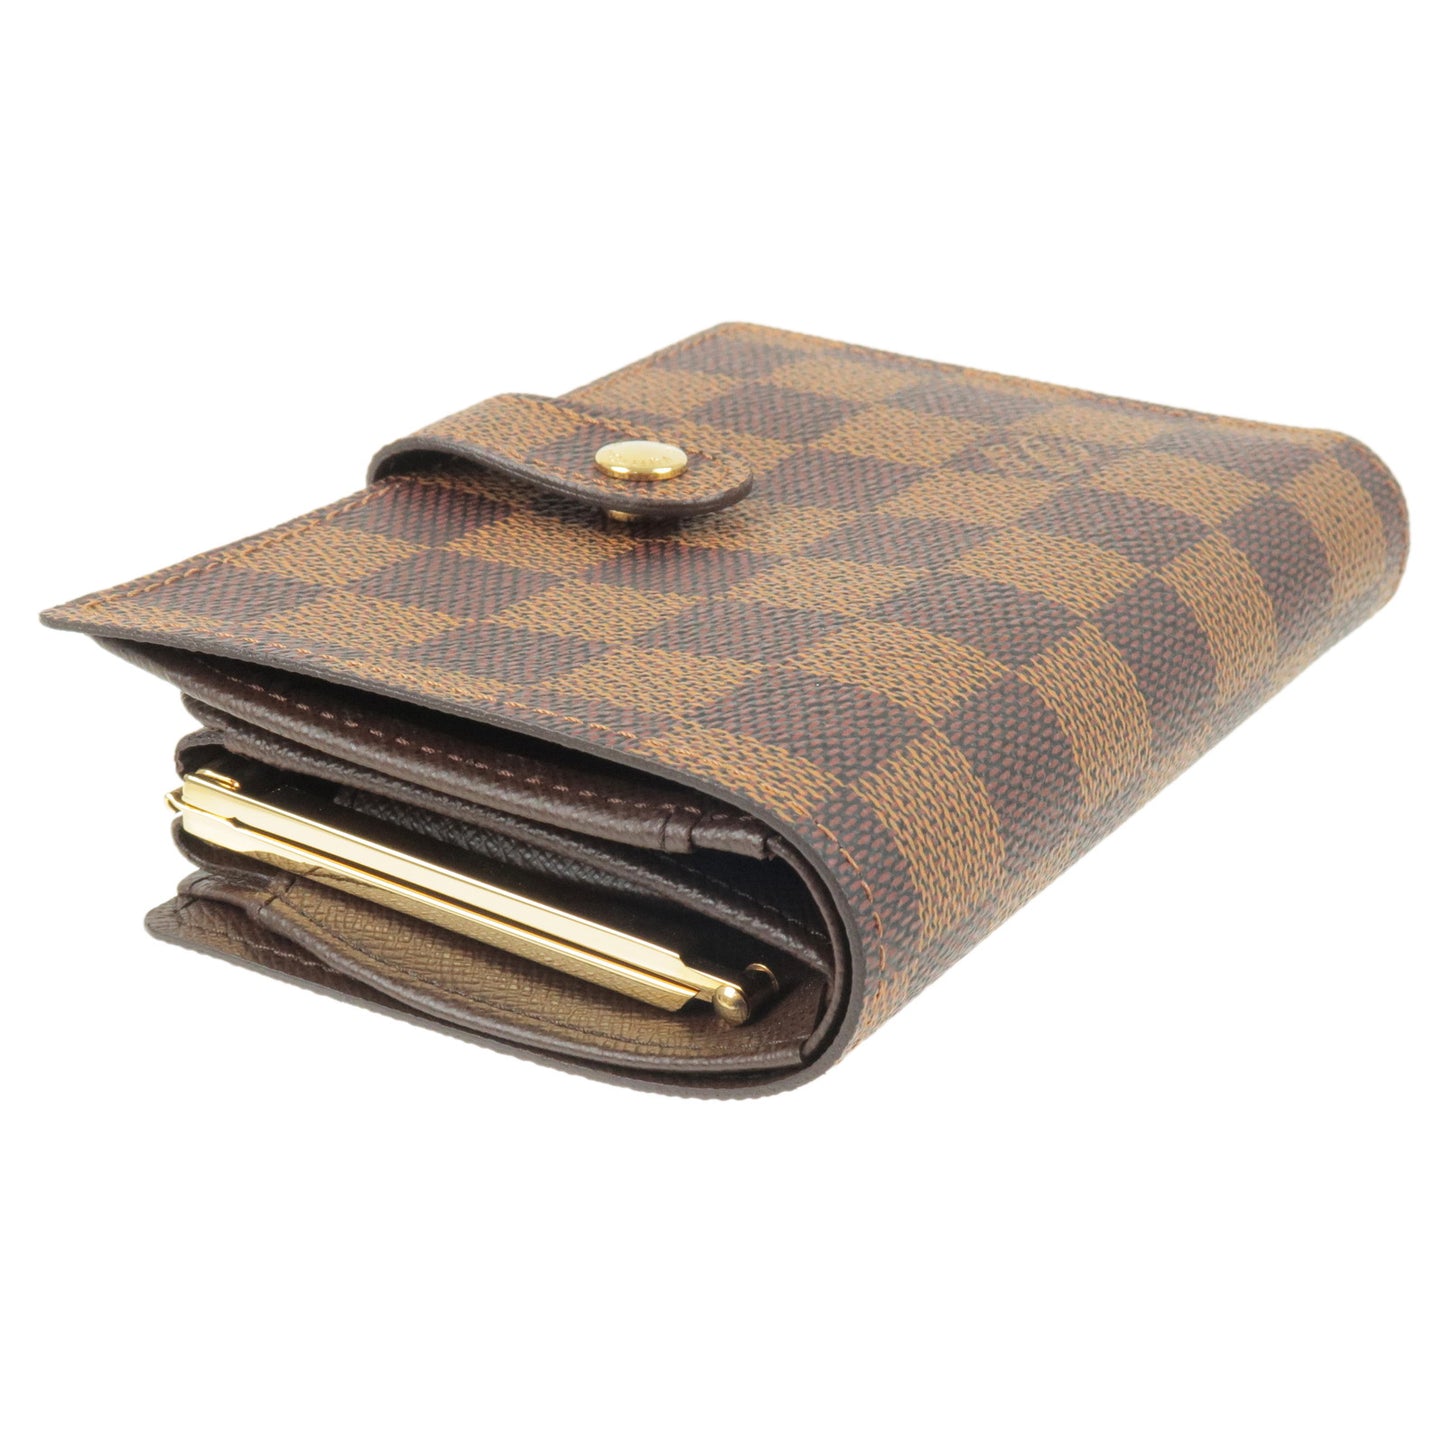 Louis Vuitton Damier Portefeuille Viennois Bi-Fold Wallet N61674